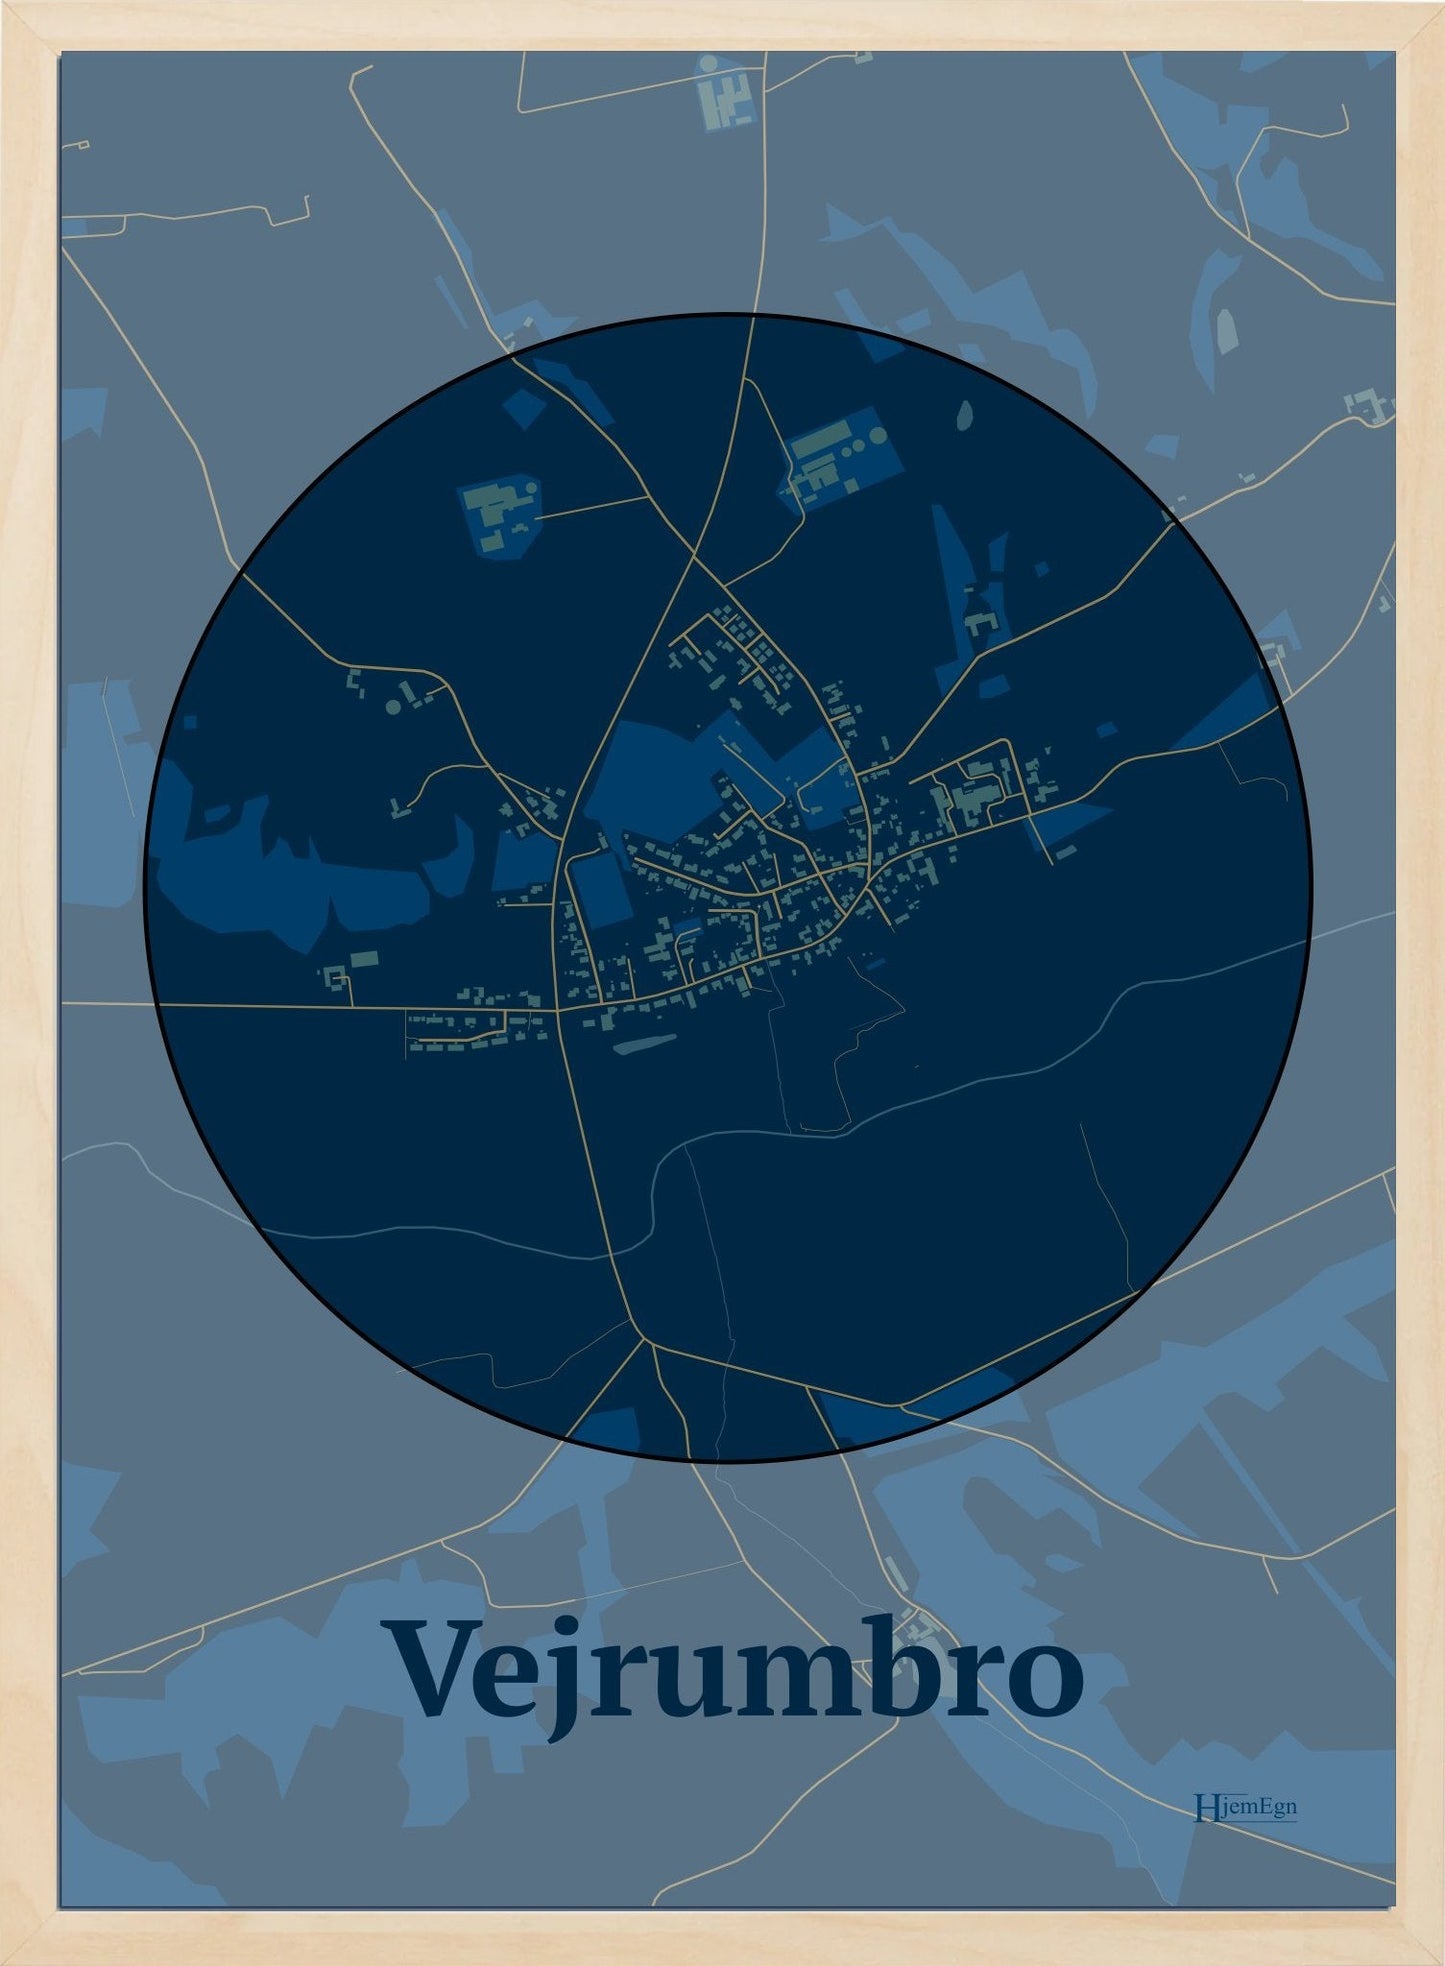 Vejrumbro plakat i farve mørk blå og HjemEgn.dk design centrum. Design bykort for Vejrumbro